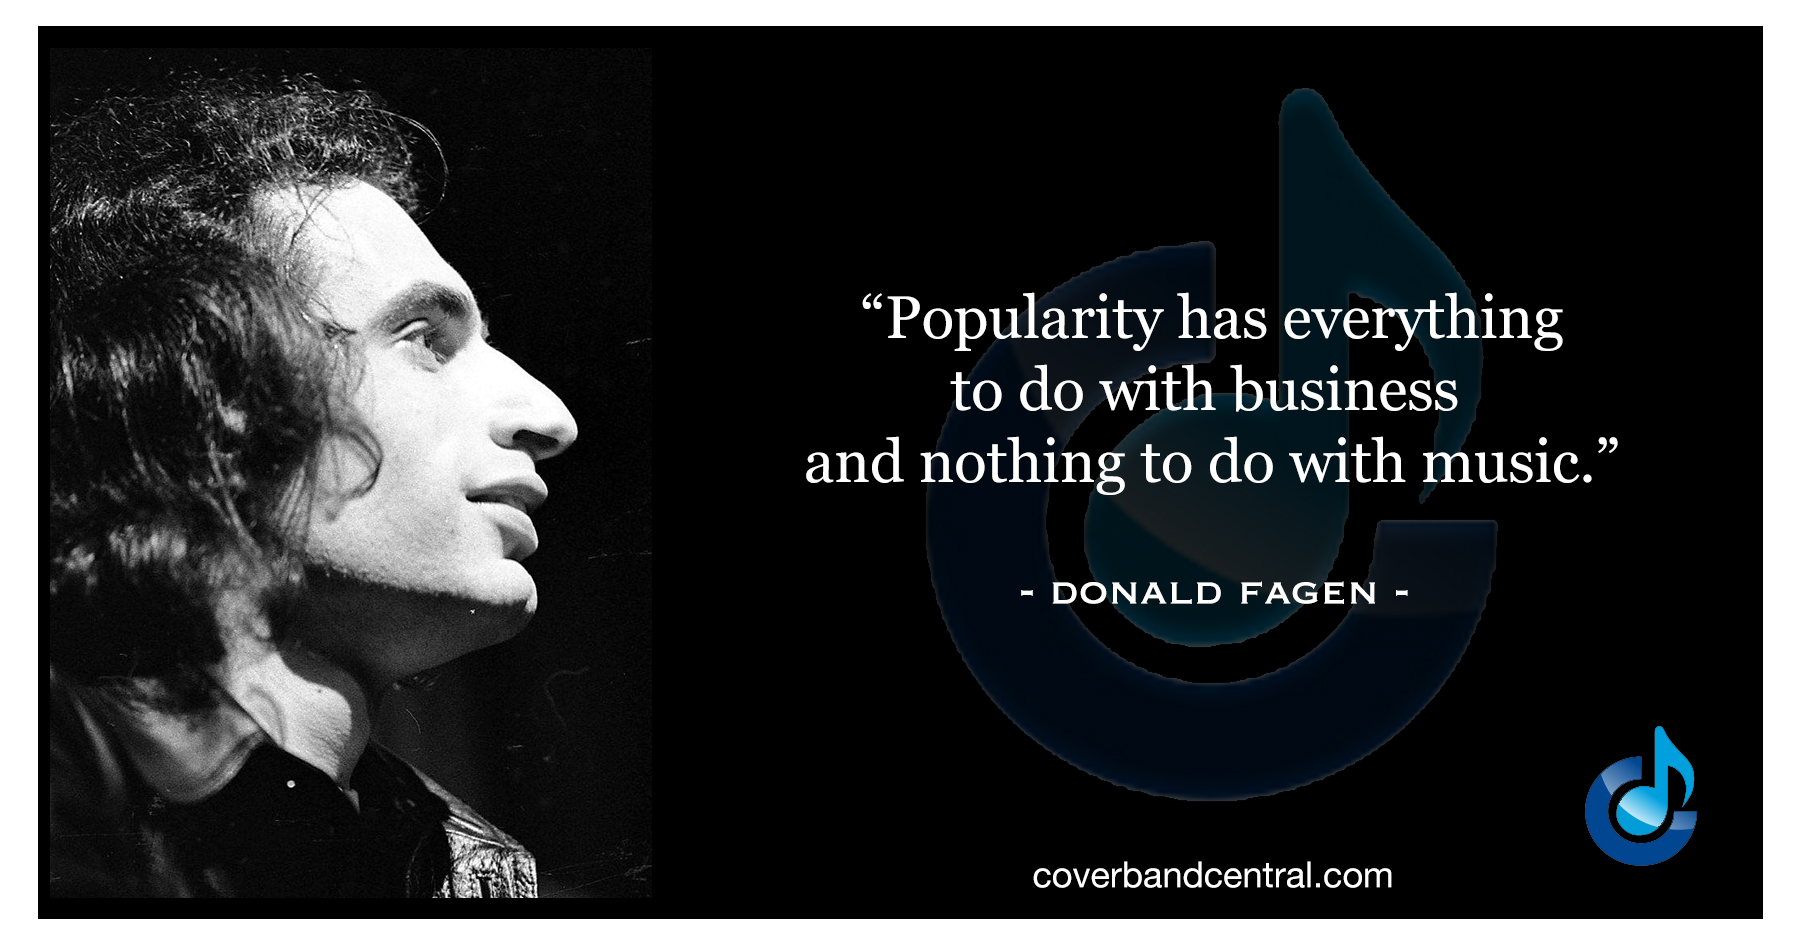 Donald Fagen quote